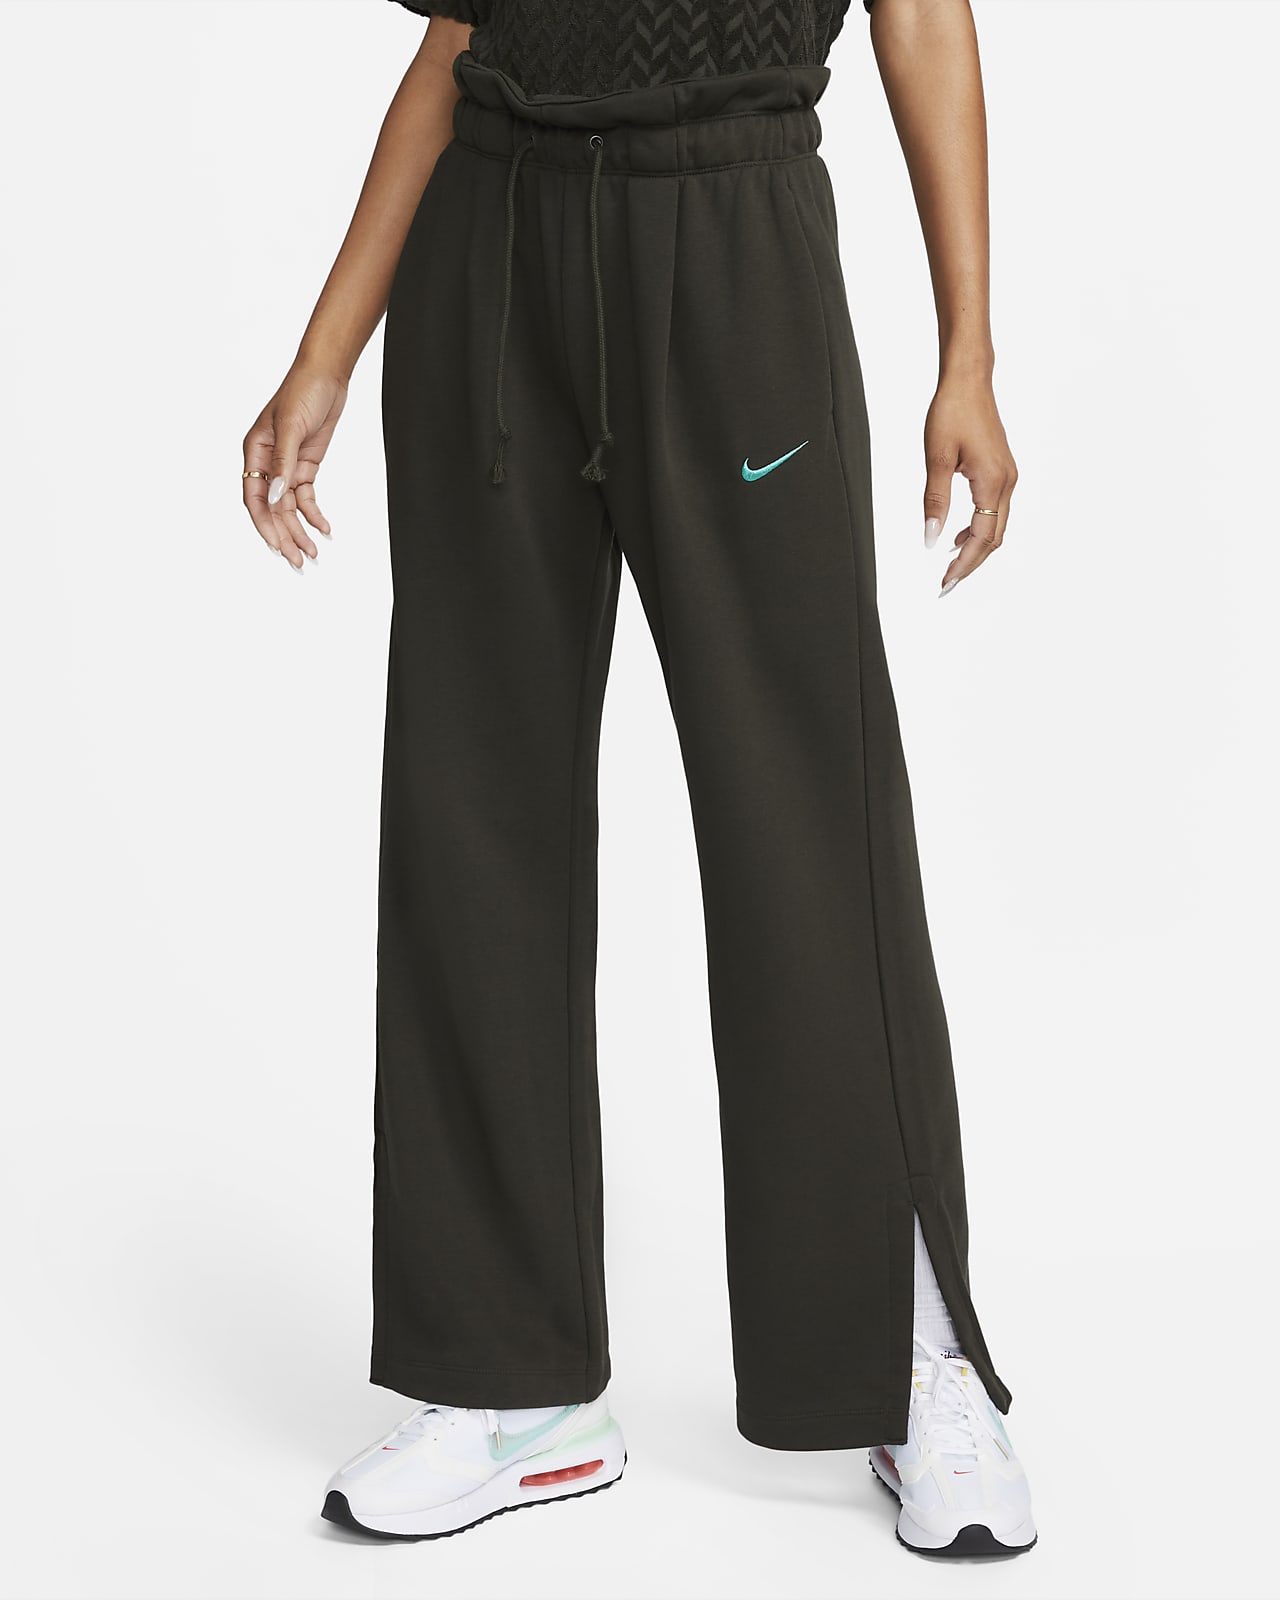 Pantalon taille haute en tissu Fleece à ourlet ouvert Nike Sportswear Everyday Modern pour Femme